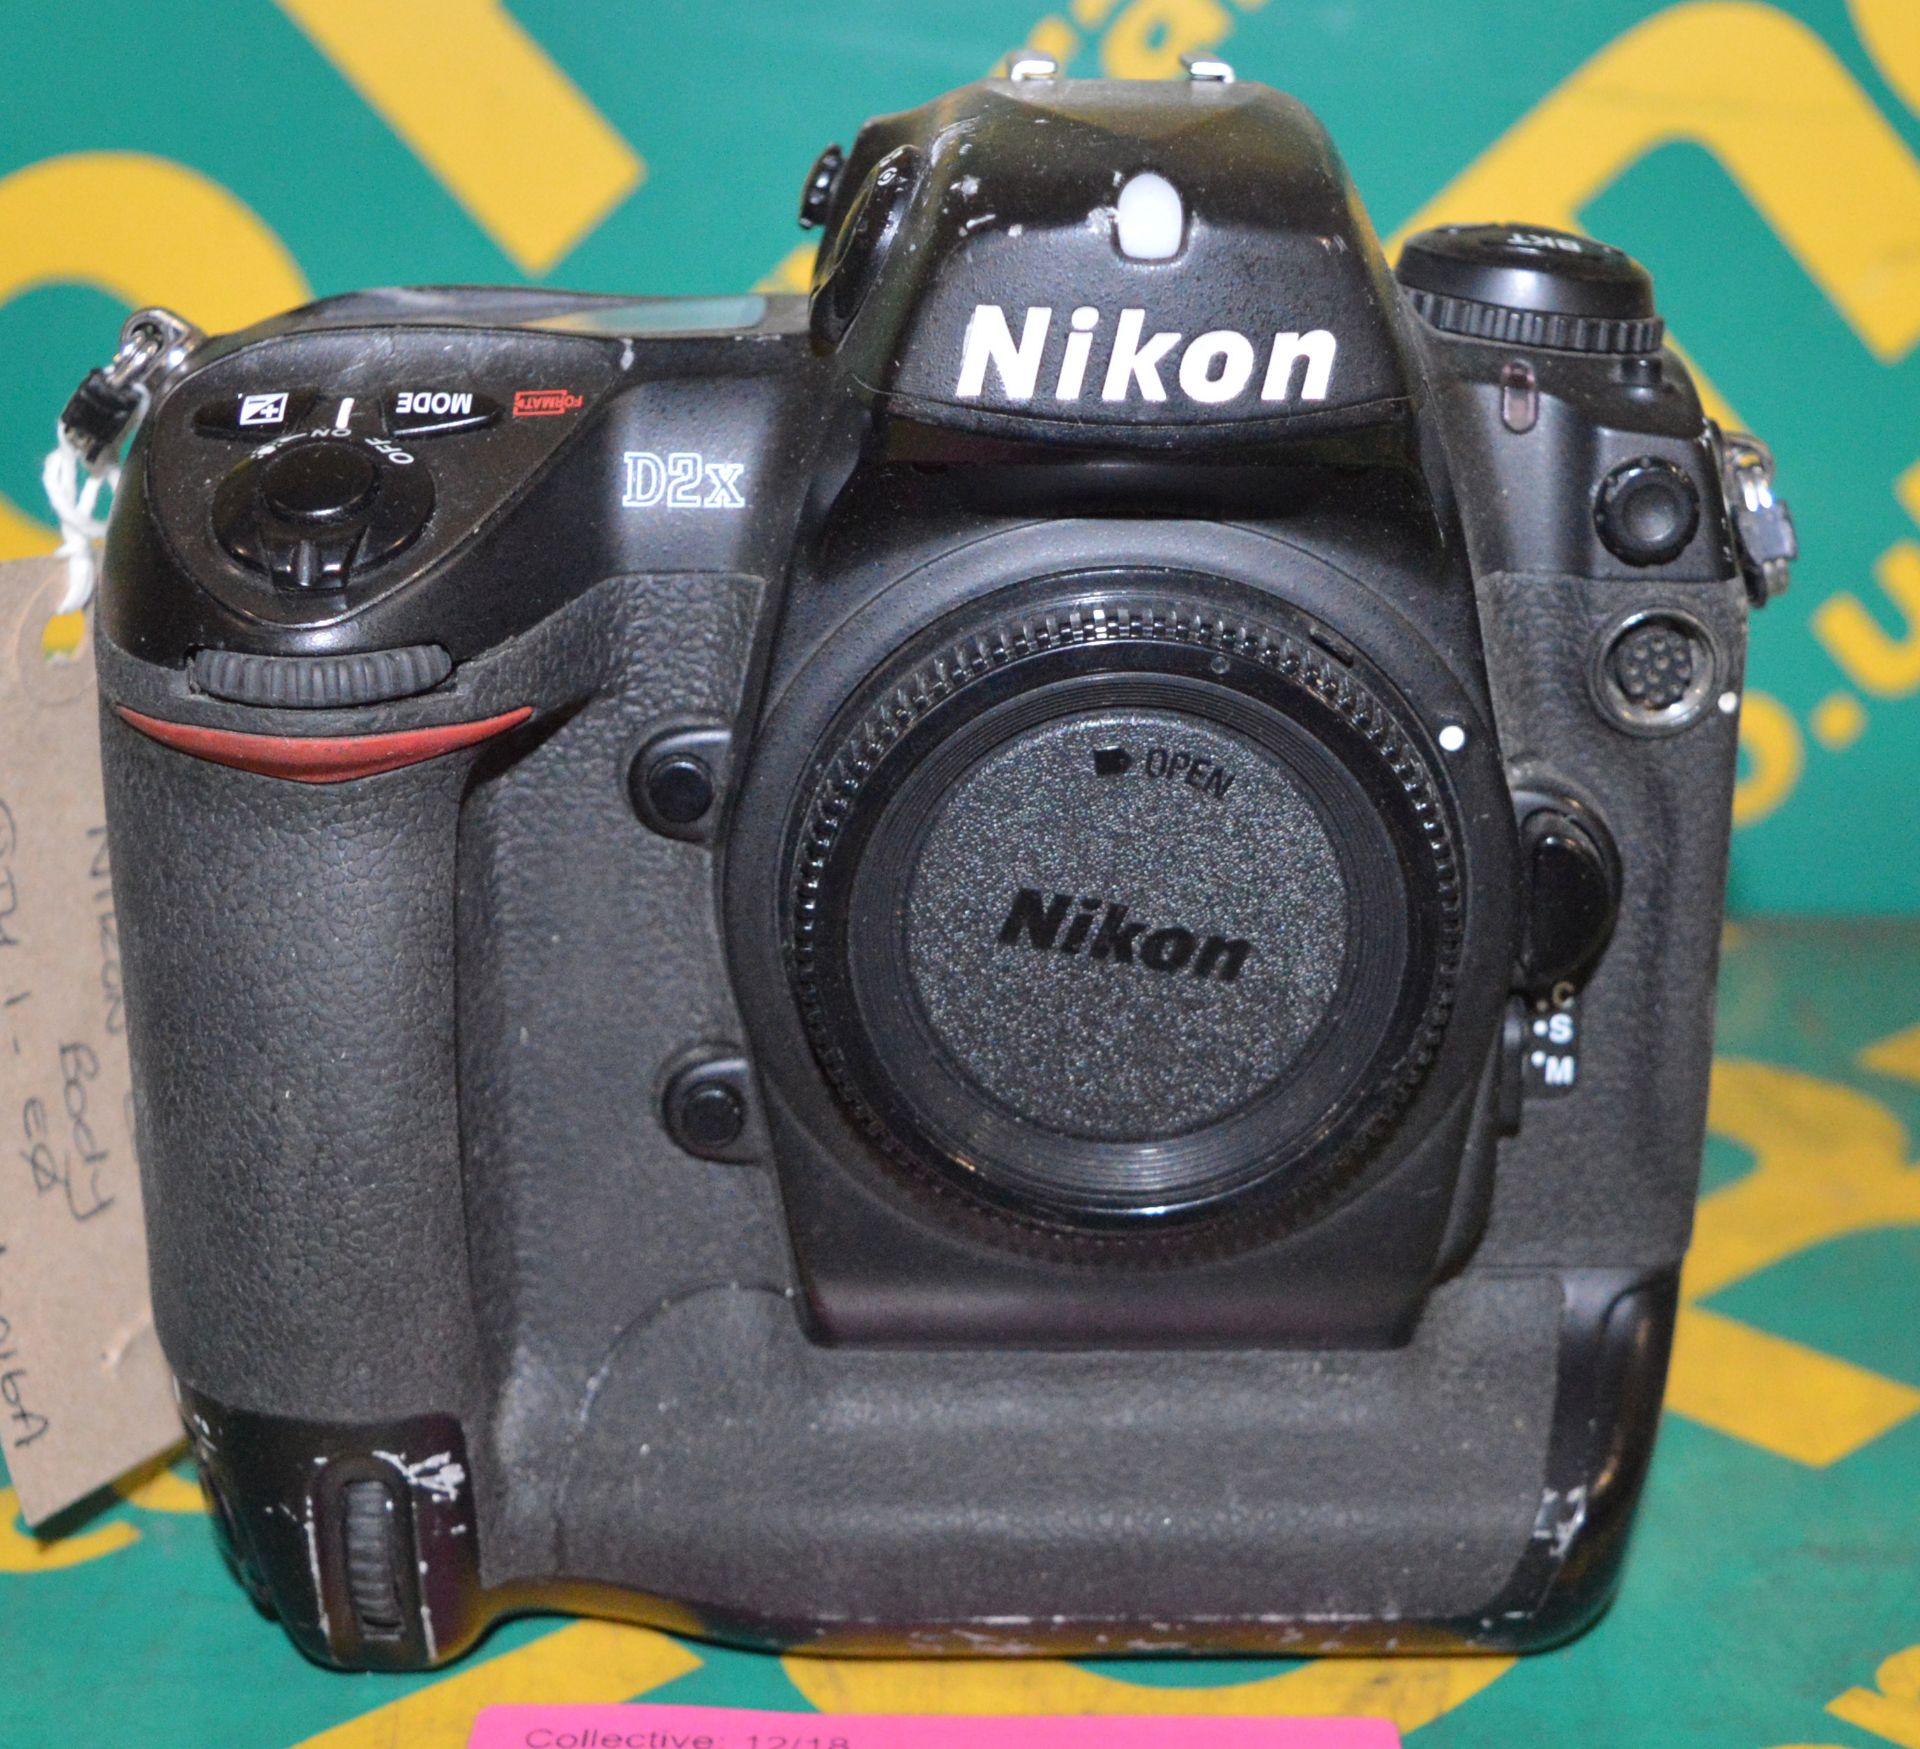 Nikon D2x Digital Camera.